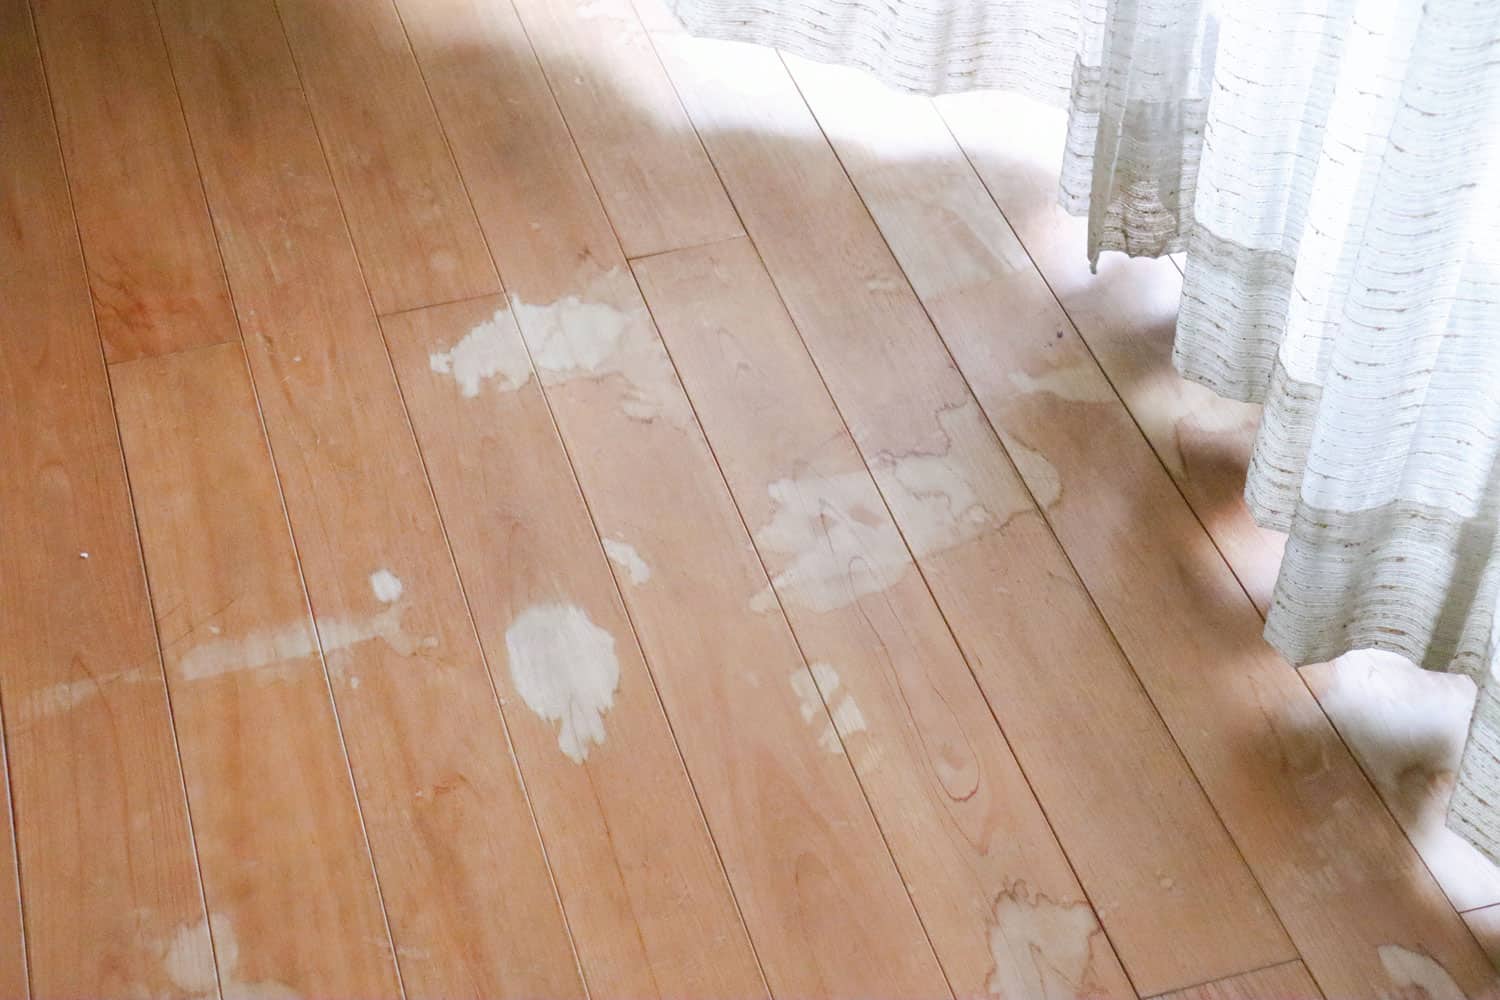 Damaged flooring due to cat urine